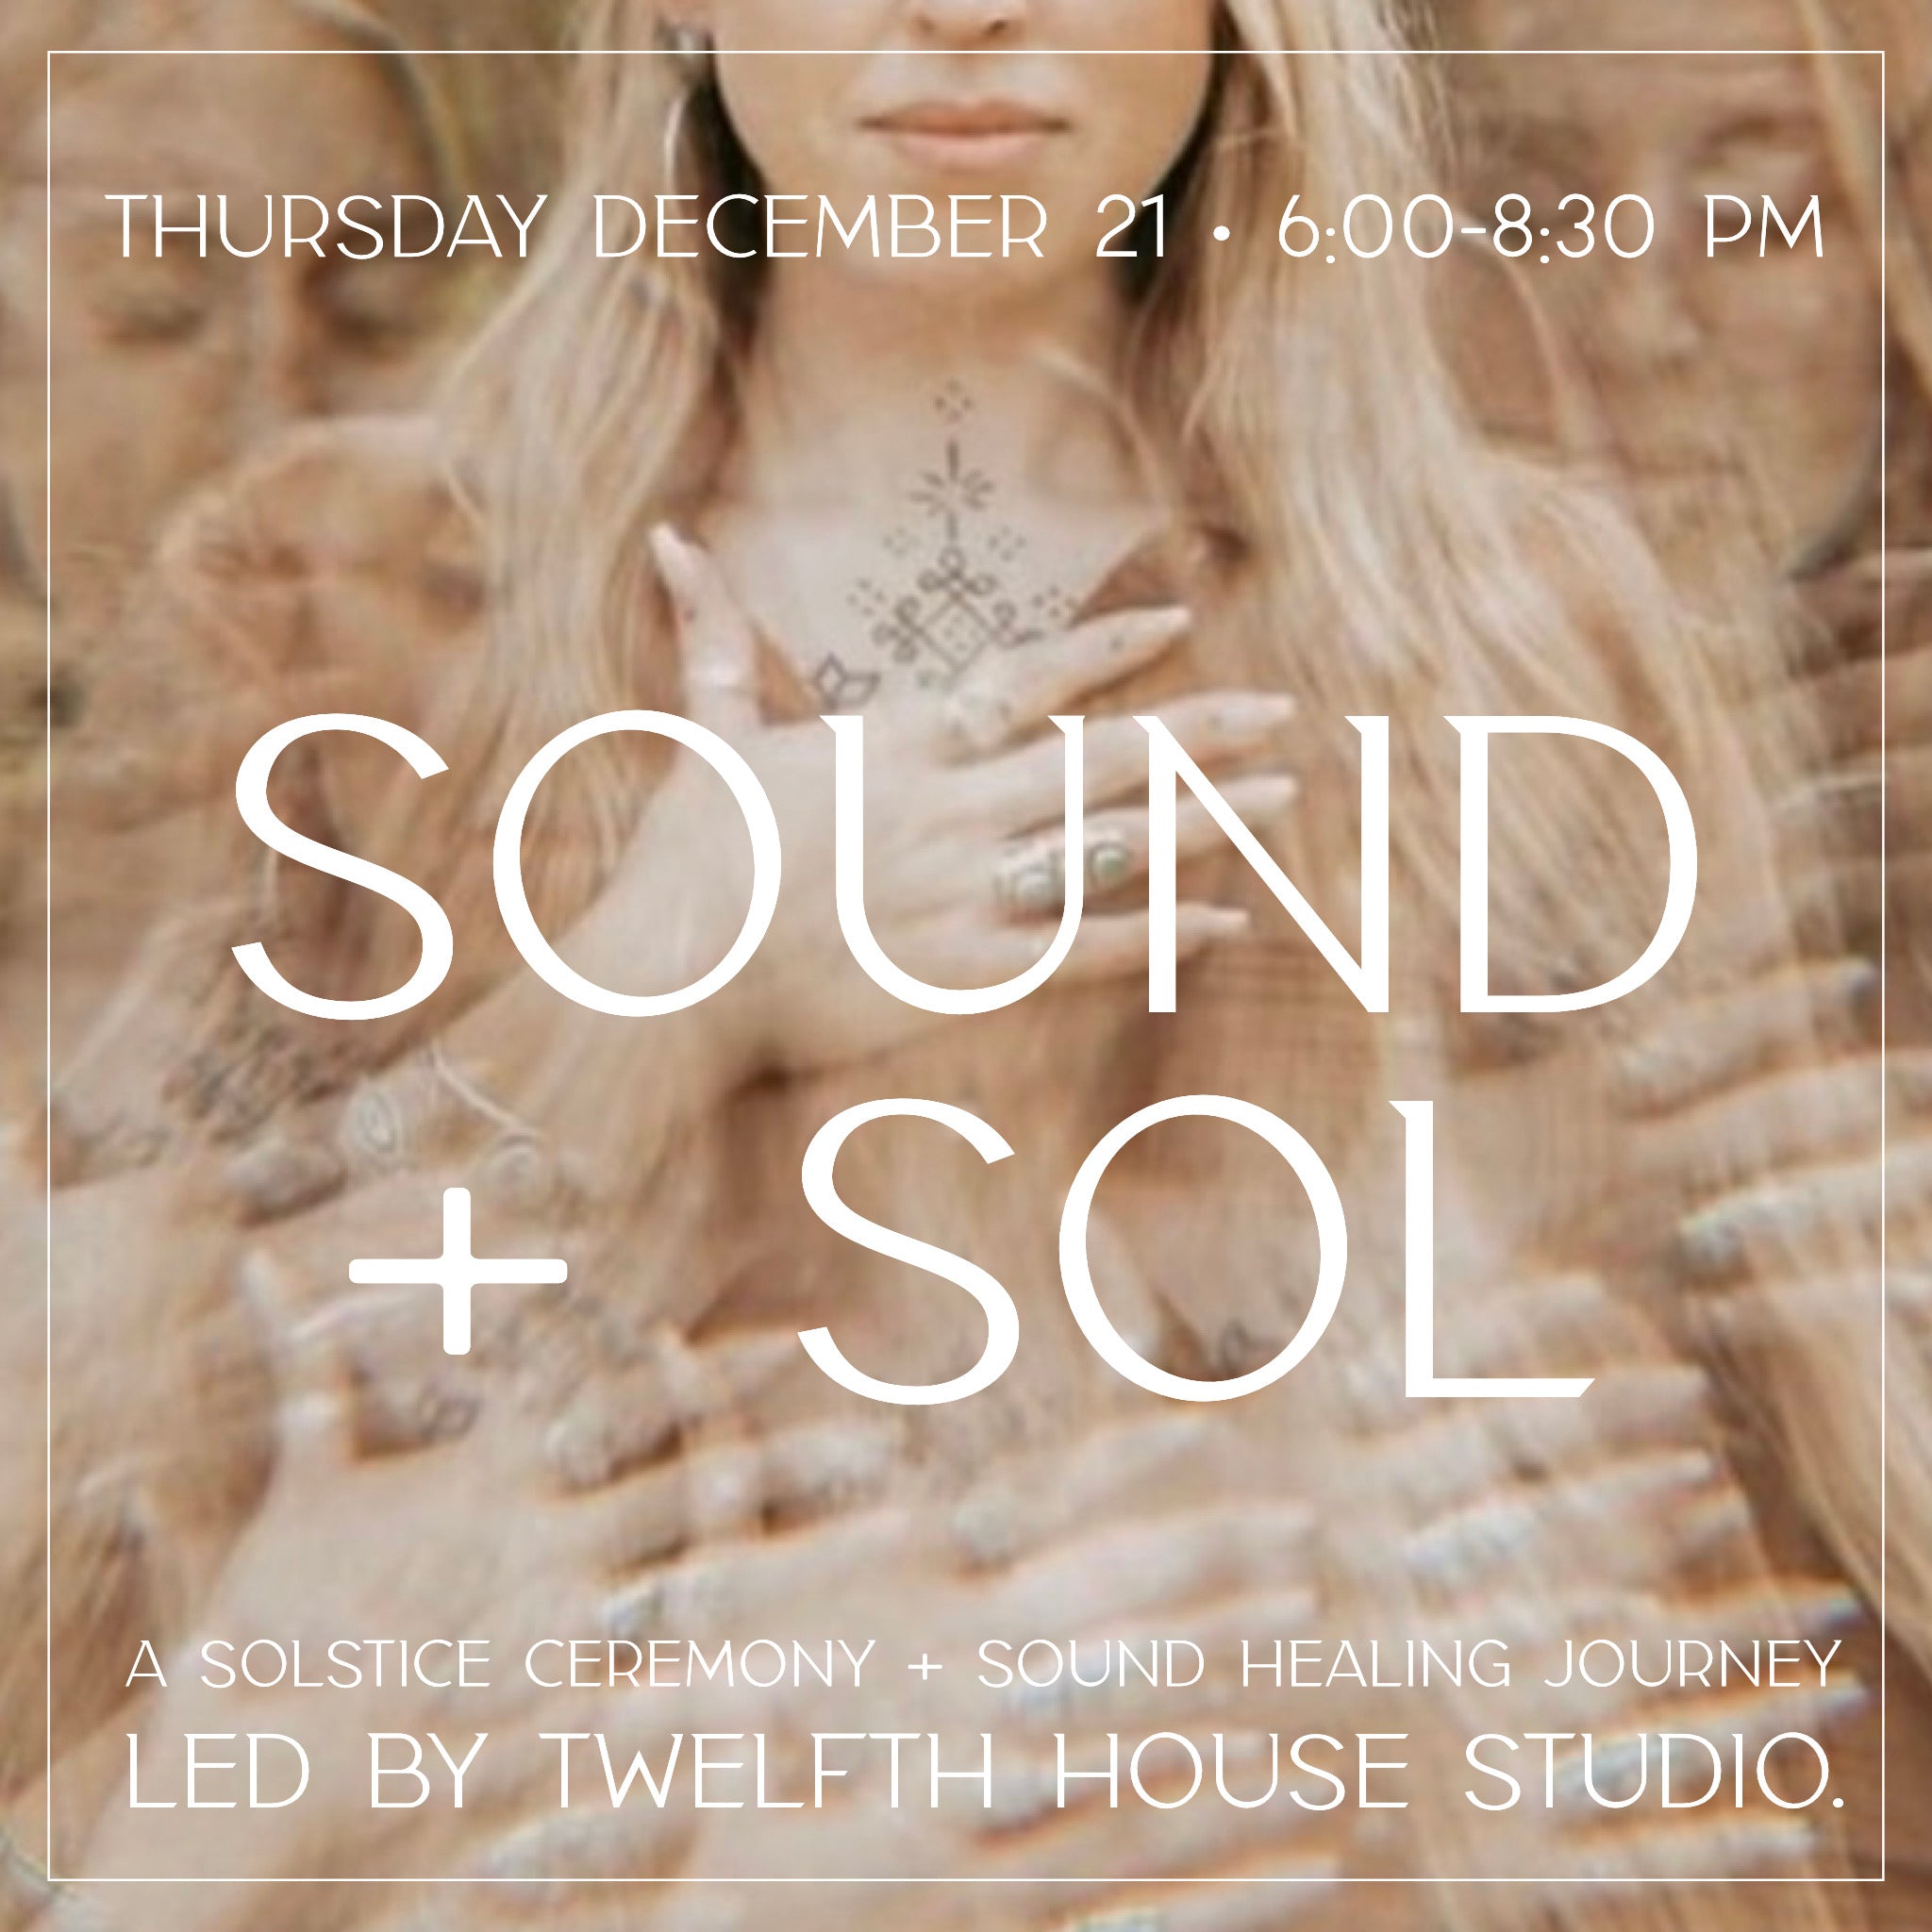 Sound + Sol - Sound Healing Journey & Solstice Ceremony